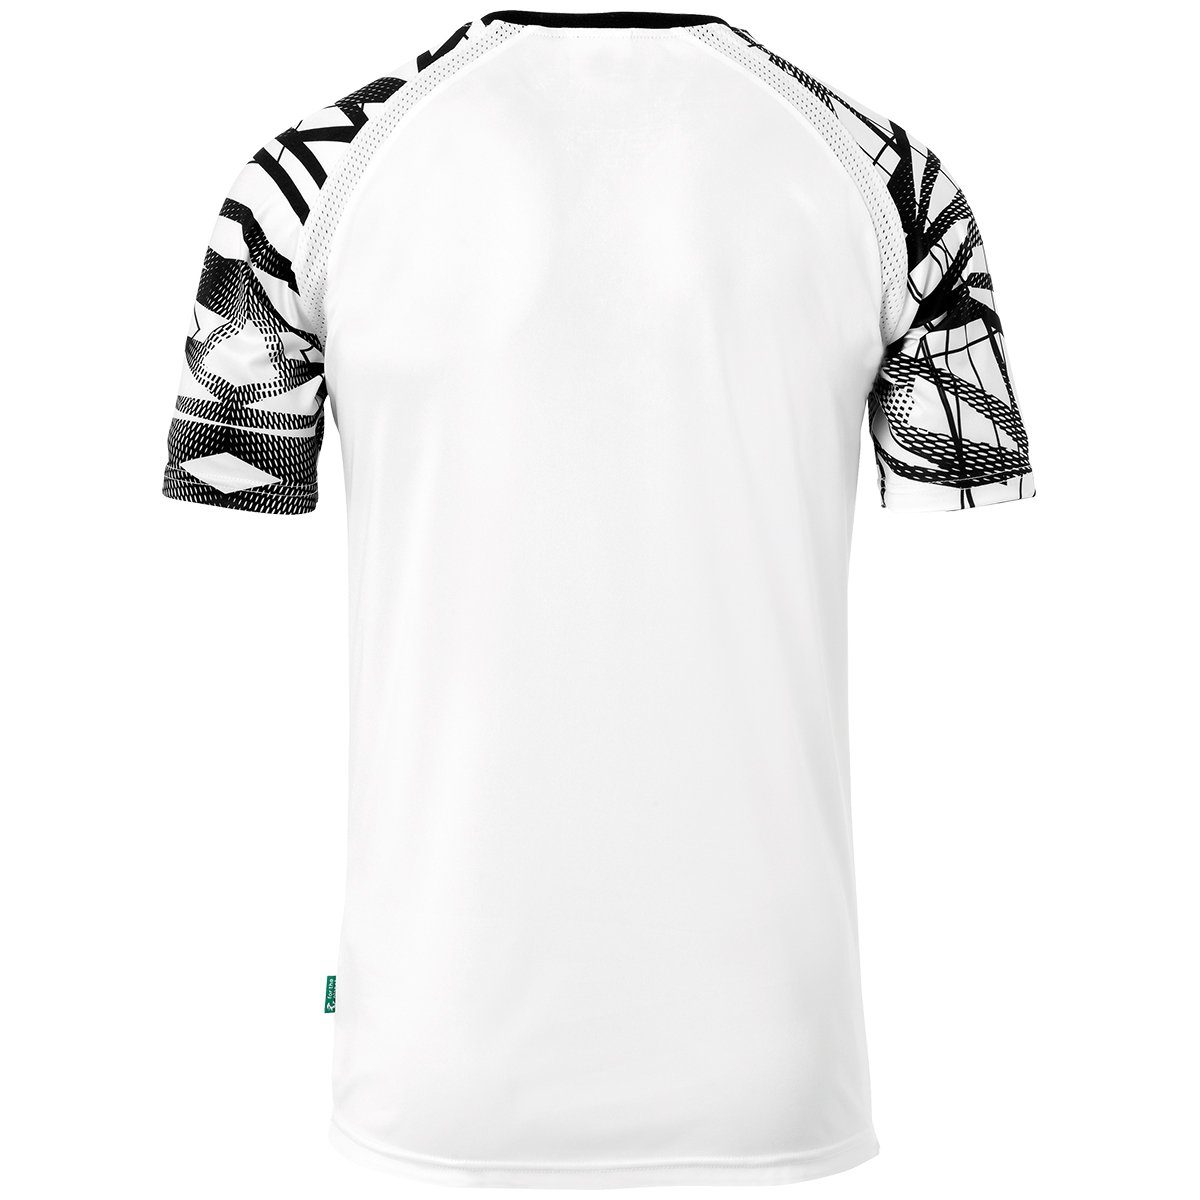 KURZARM atmungsaktiv Trainings-T-Shirt weiß/schwarz 25 uhlsport GOAL Trainingsshirt TRIKOT uhlsport